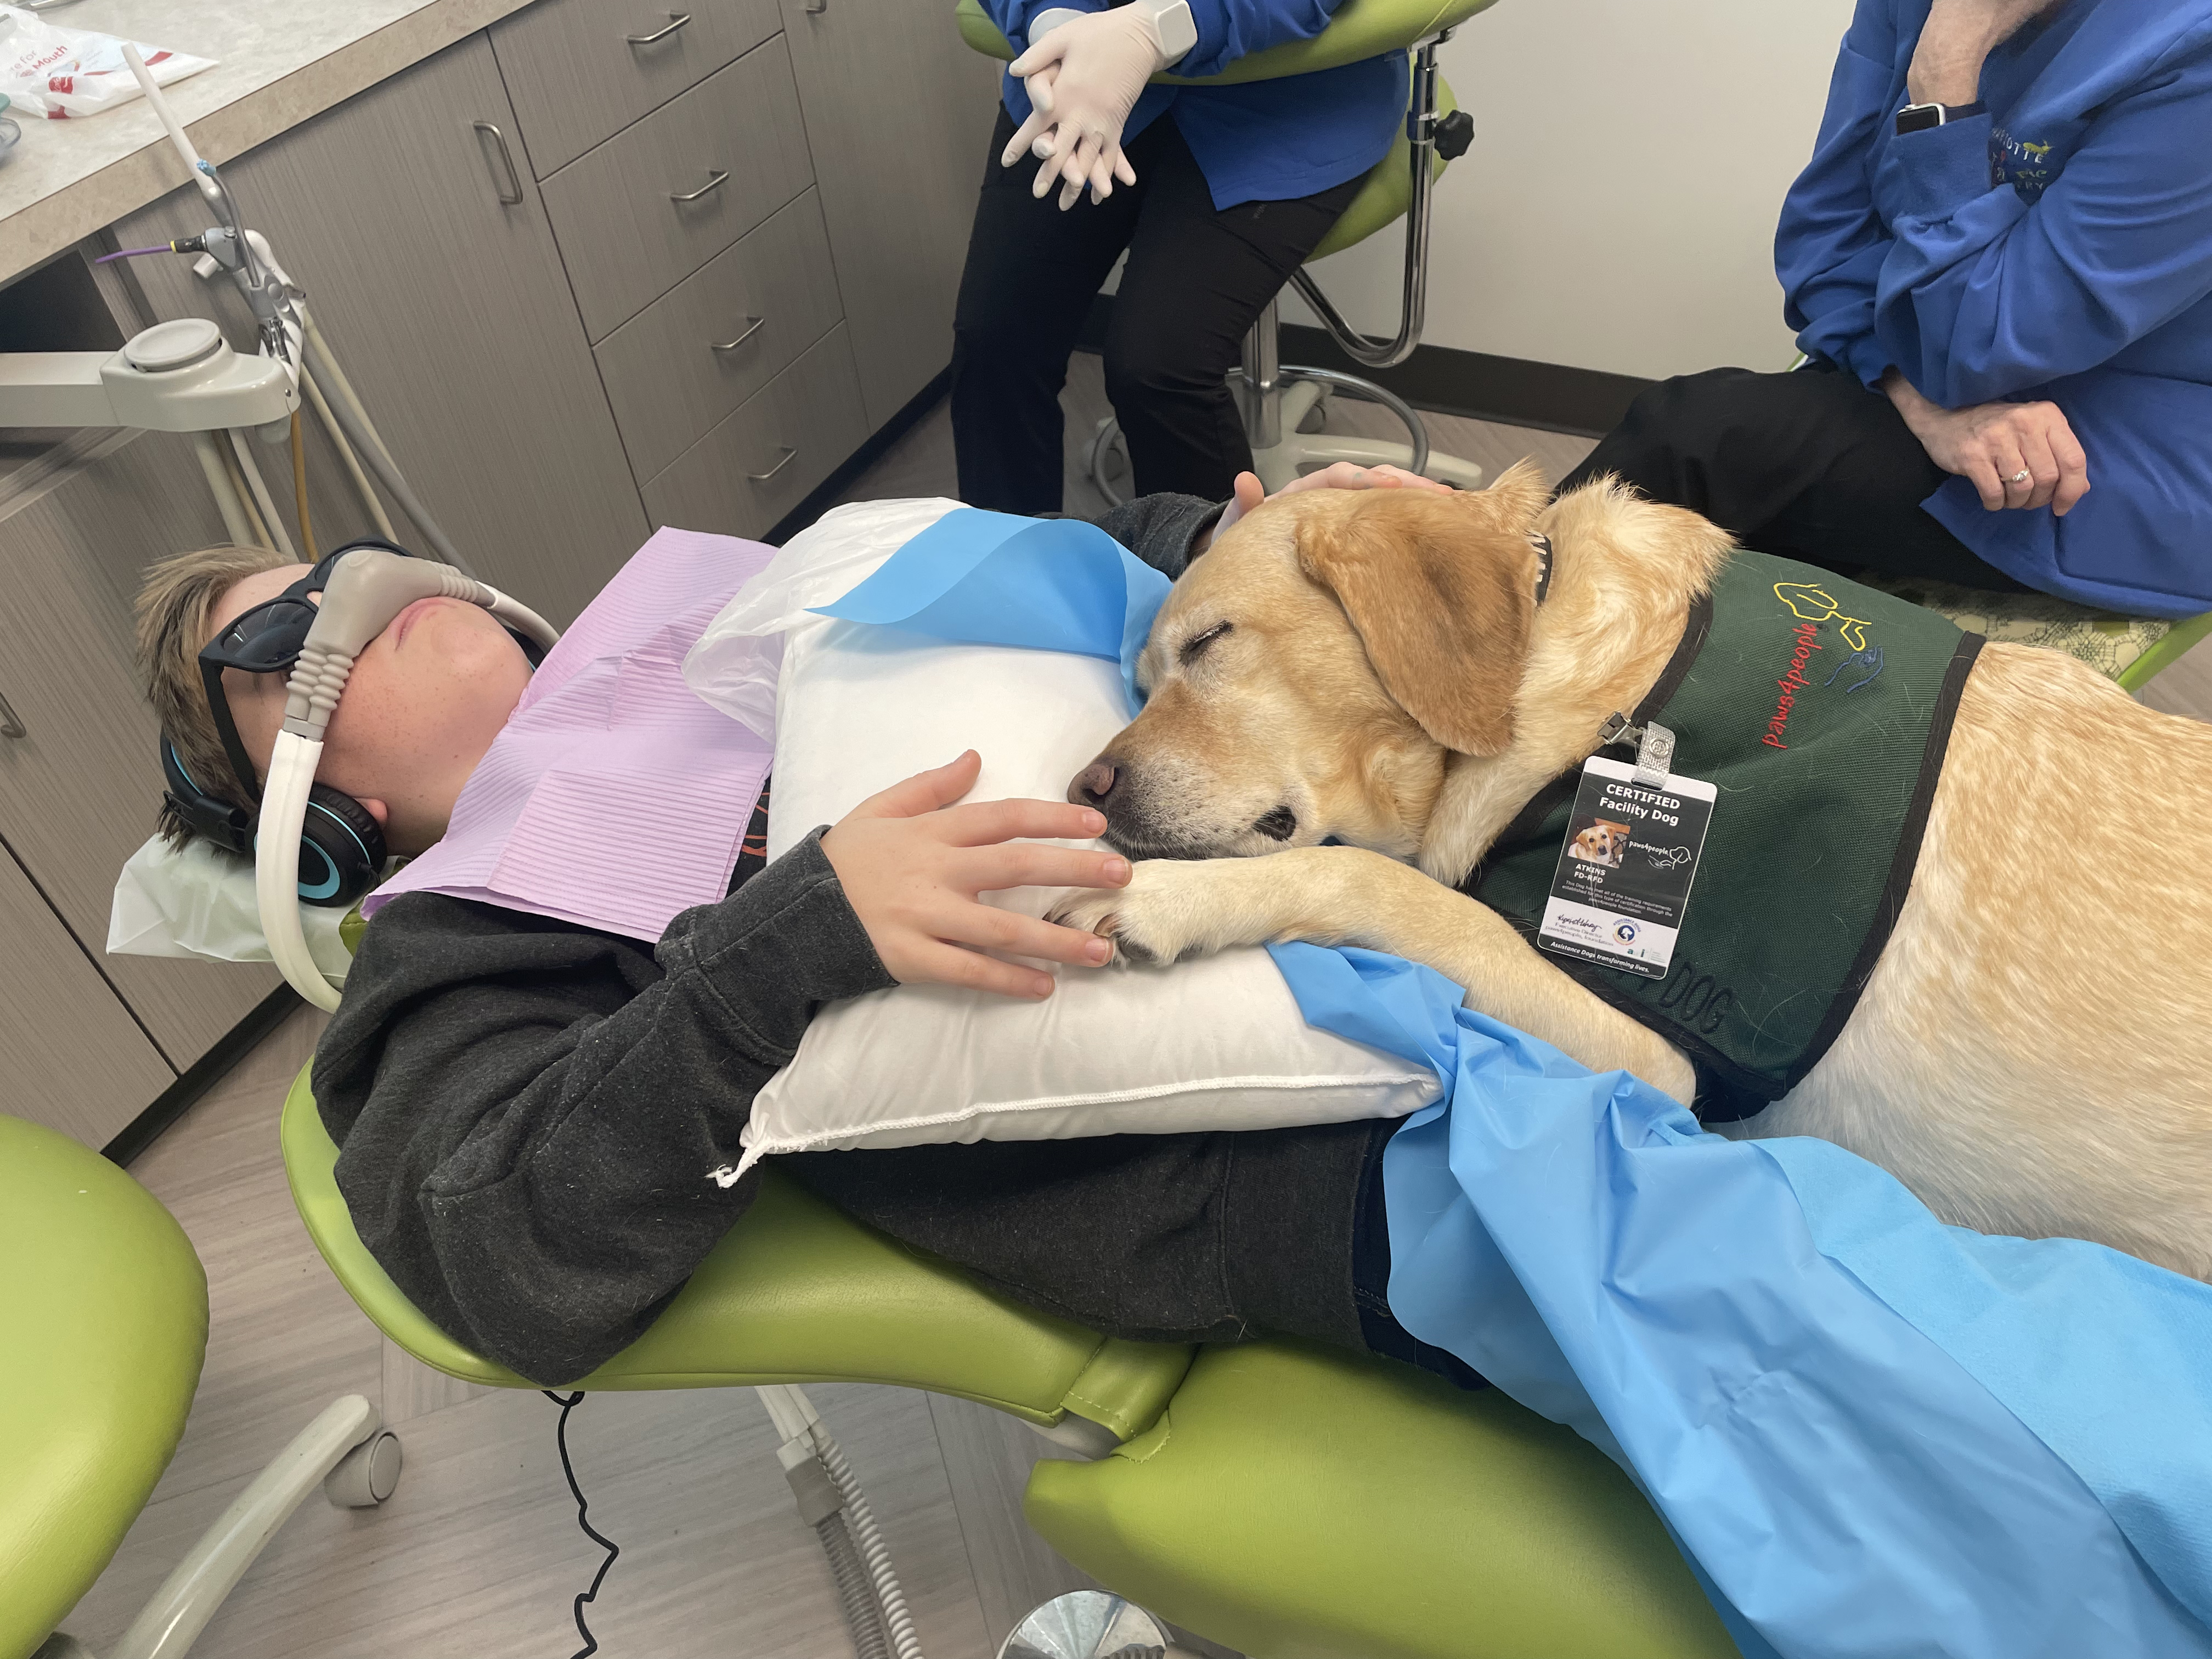 A Pet Day at the Dentist’s: North Carolina Regulates Pups in Dentistry